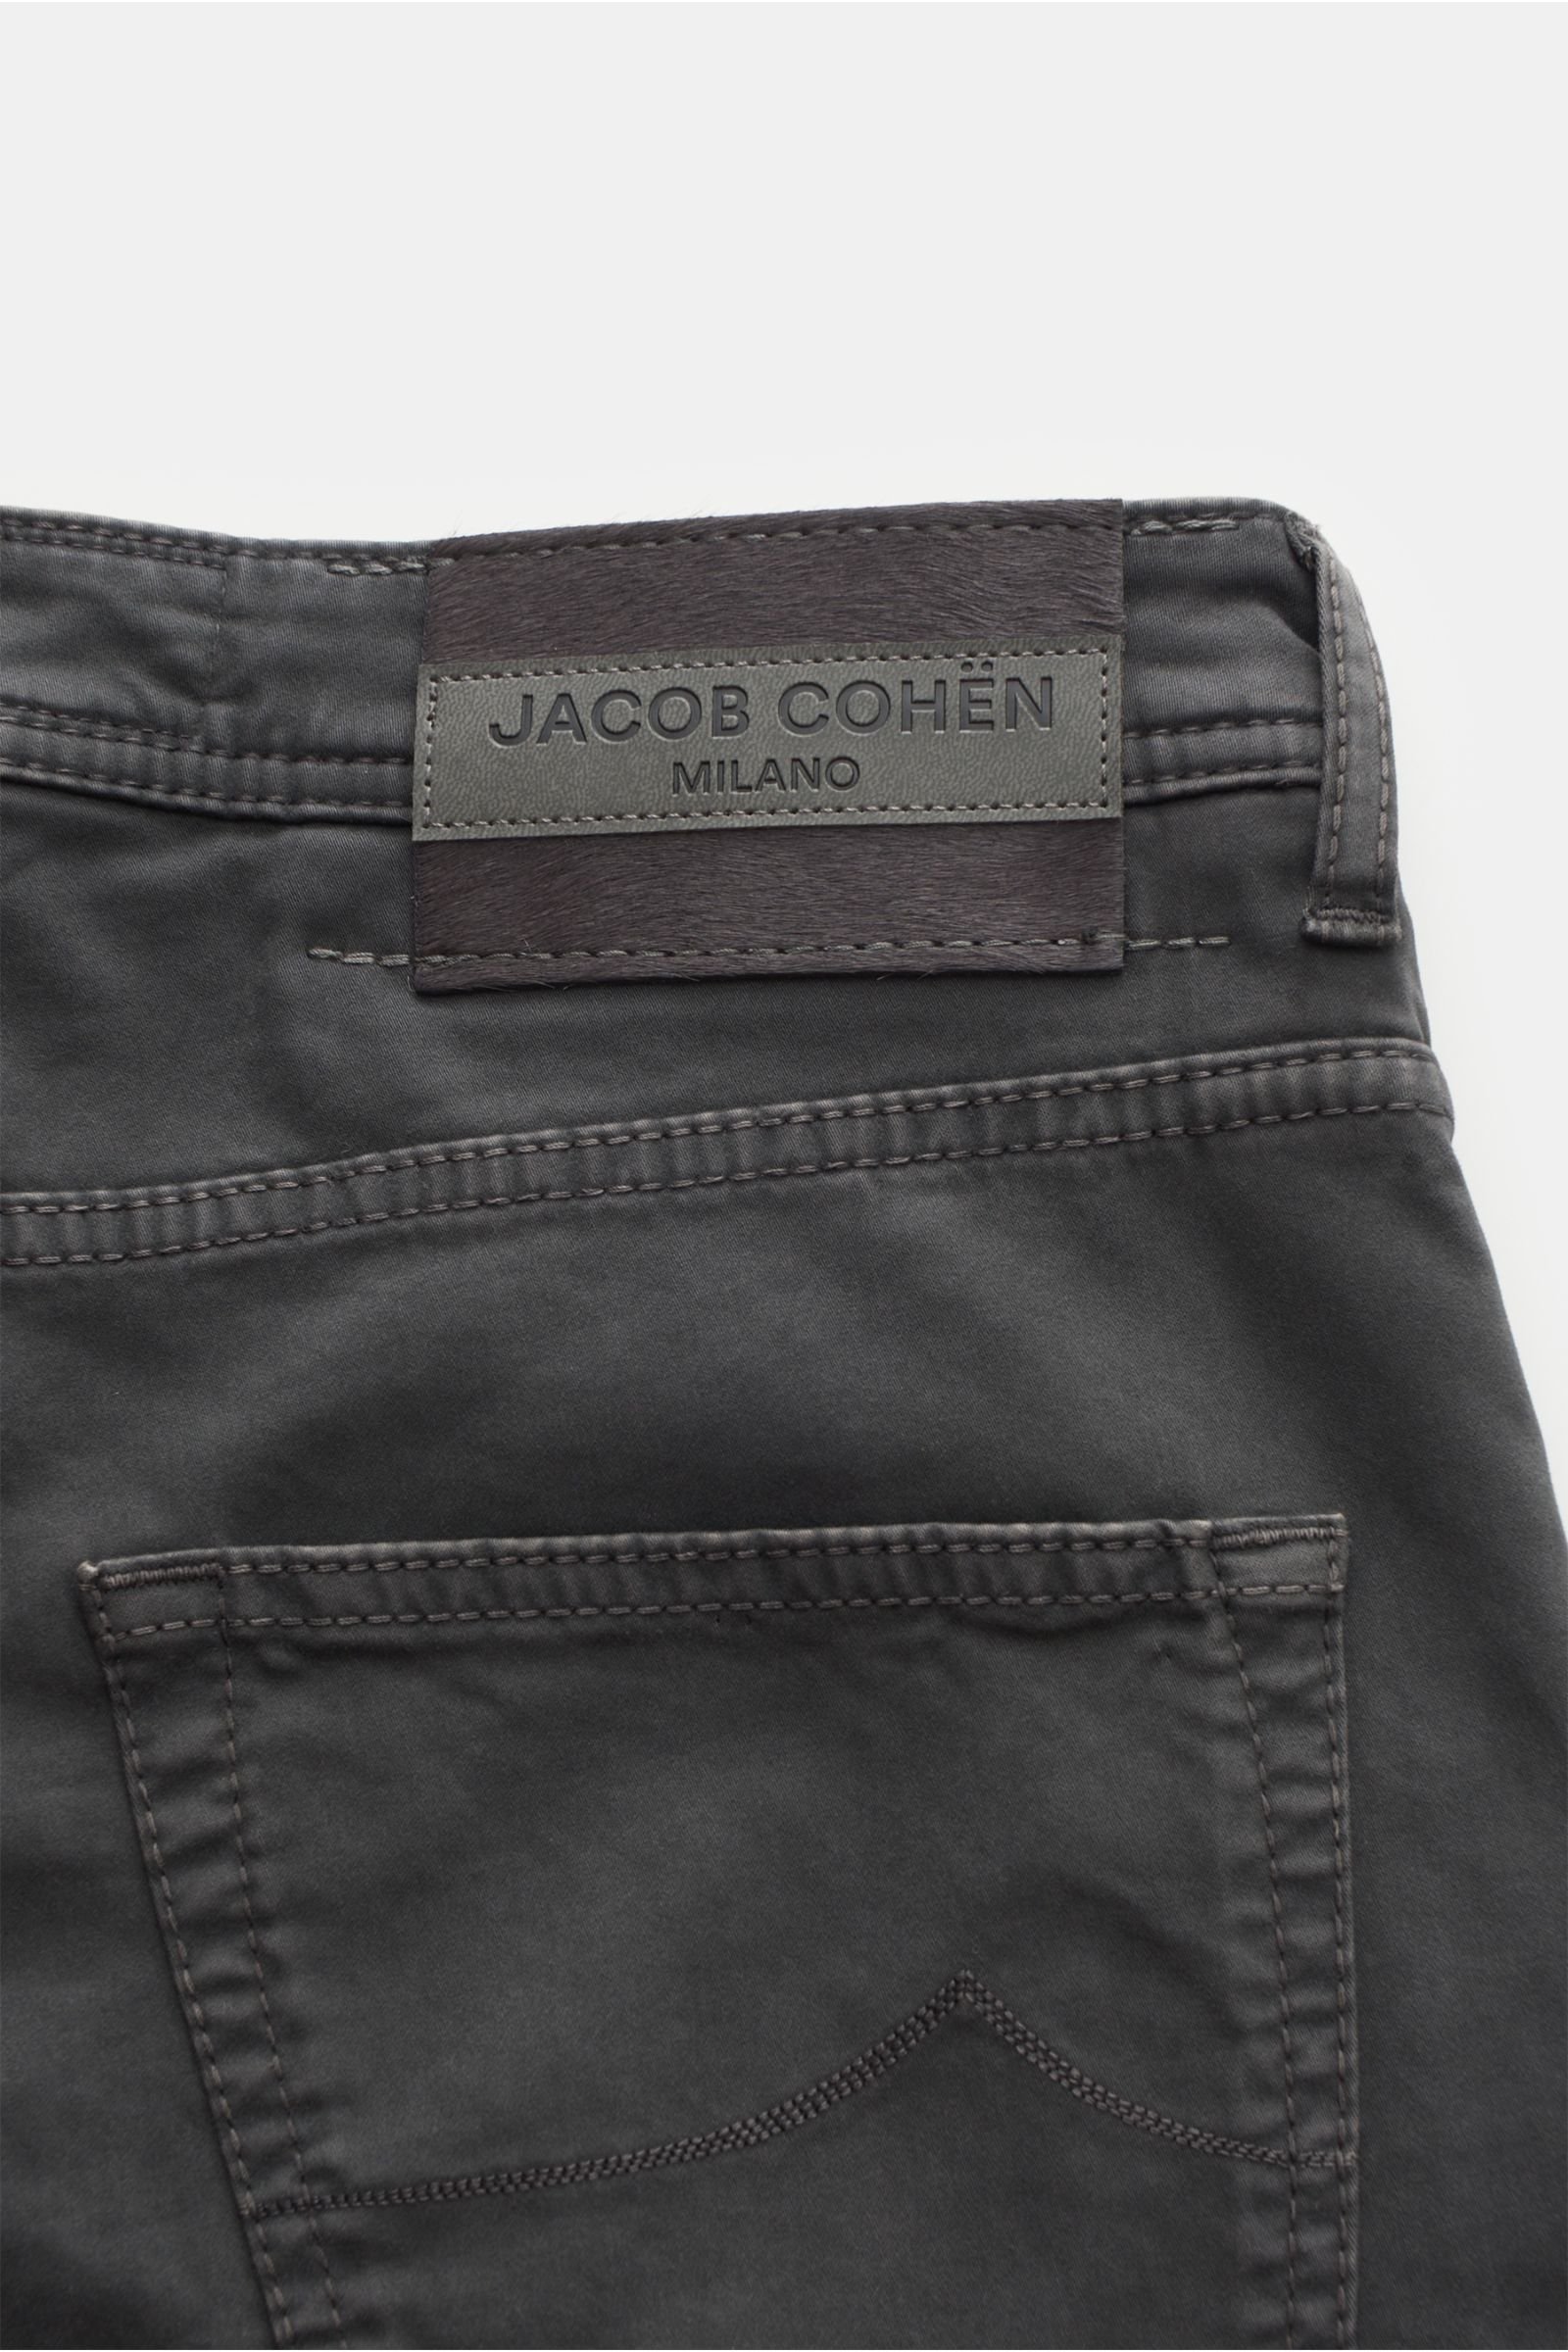 JACOB COHEN trousers 'Lenny Milano' dark grey | BRAUN Hamburg